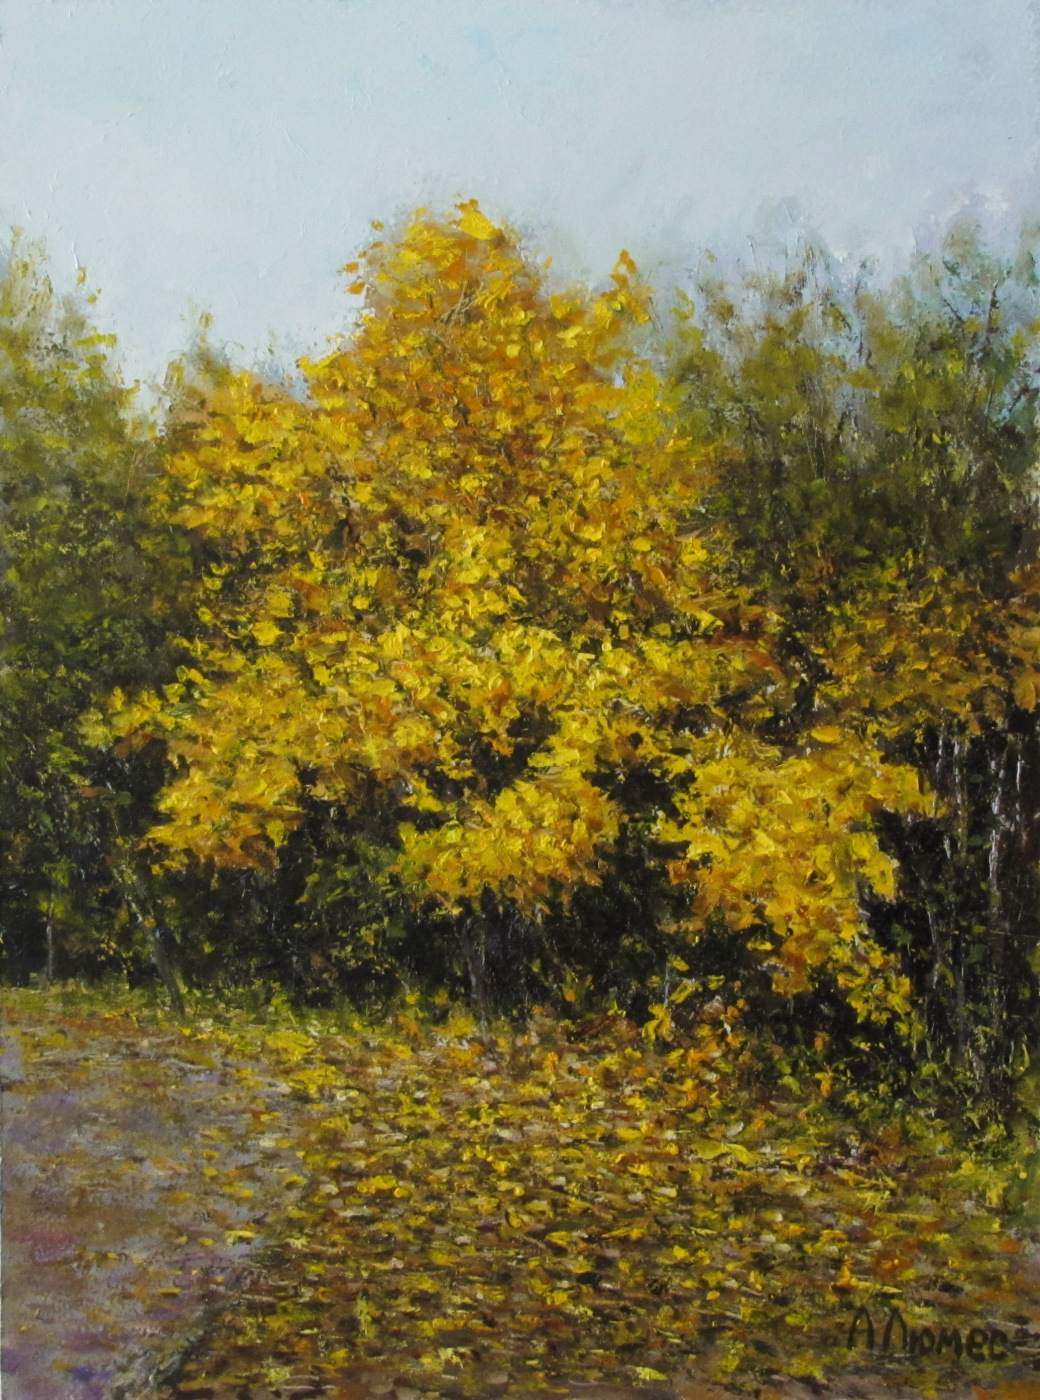 Andrew Lumez. The yellow leaf is autumnal